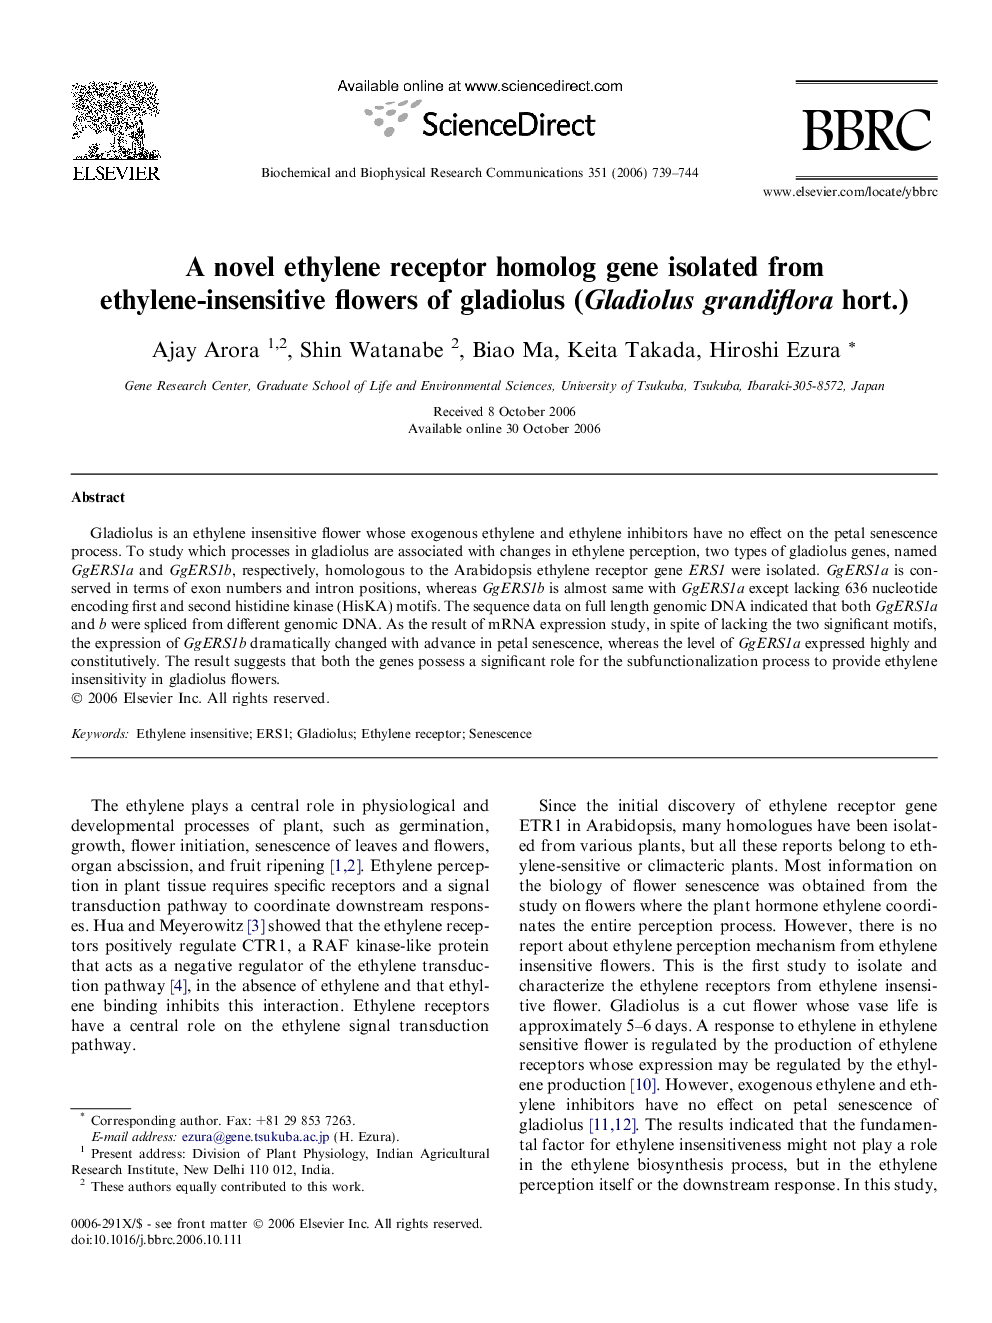 A novel ethylene receptor homolog gene isolated from ethylene-insensitive flowers of gladiolus (Gladiolus grandiflora hort.)